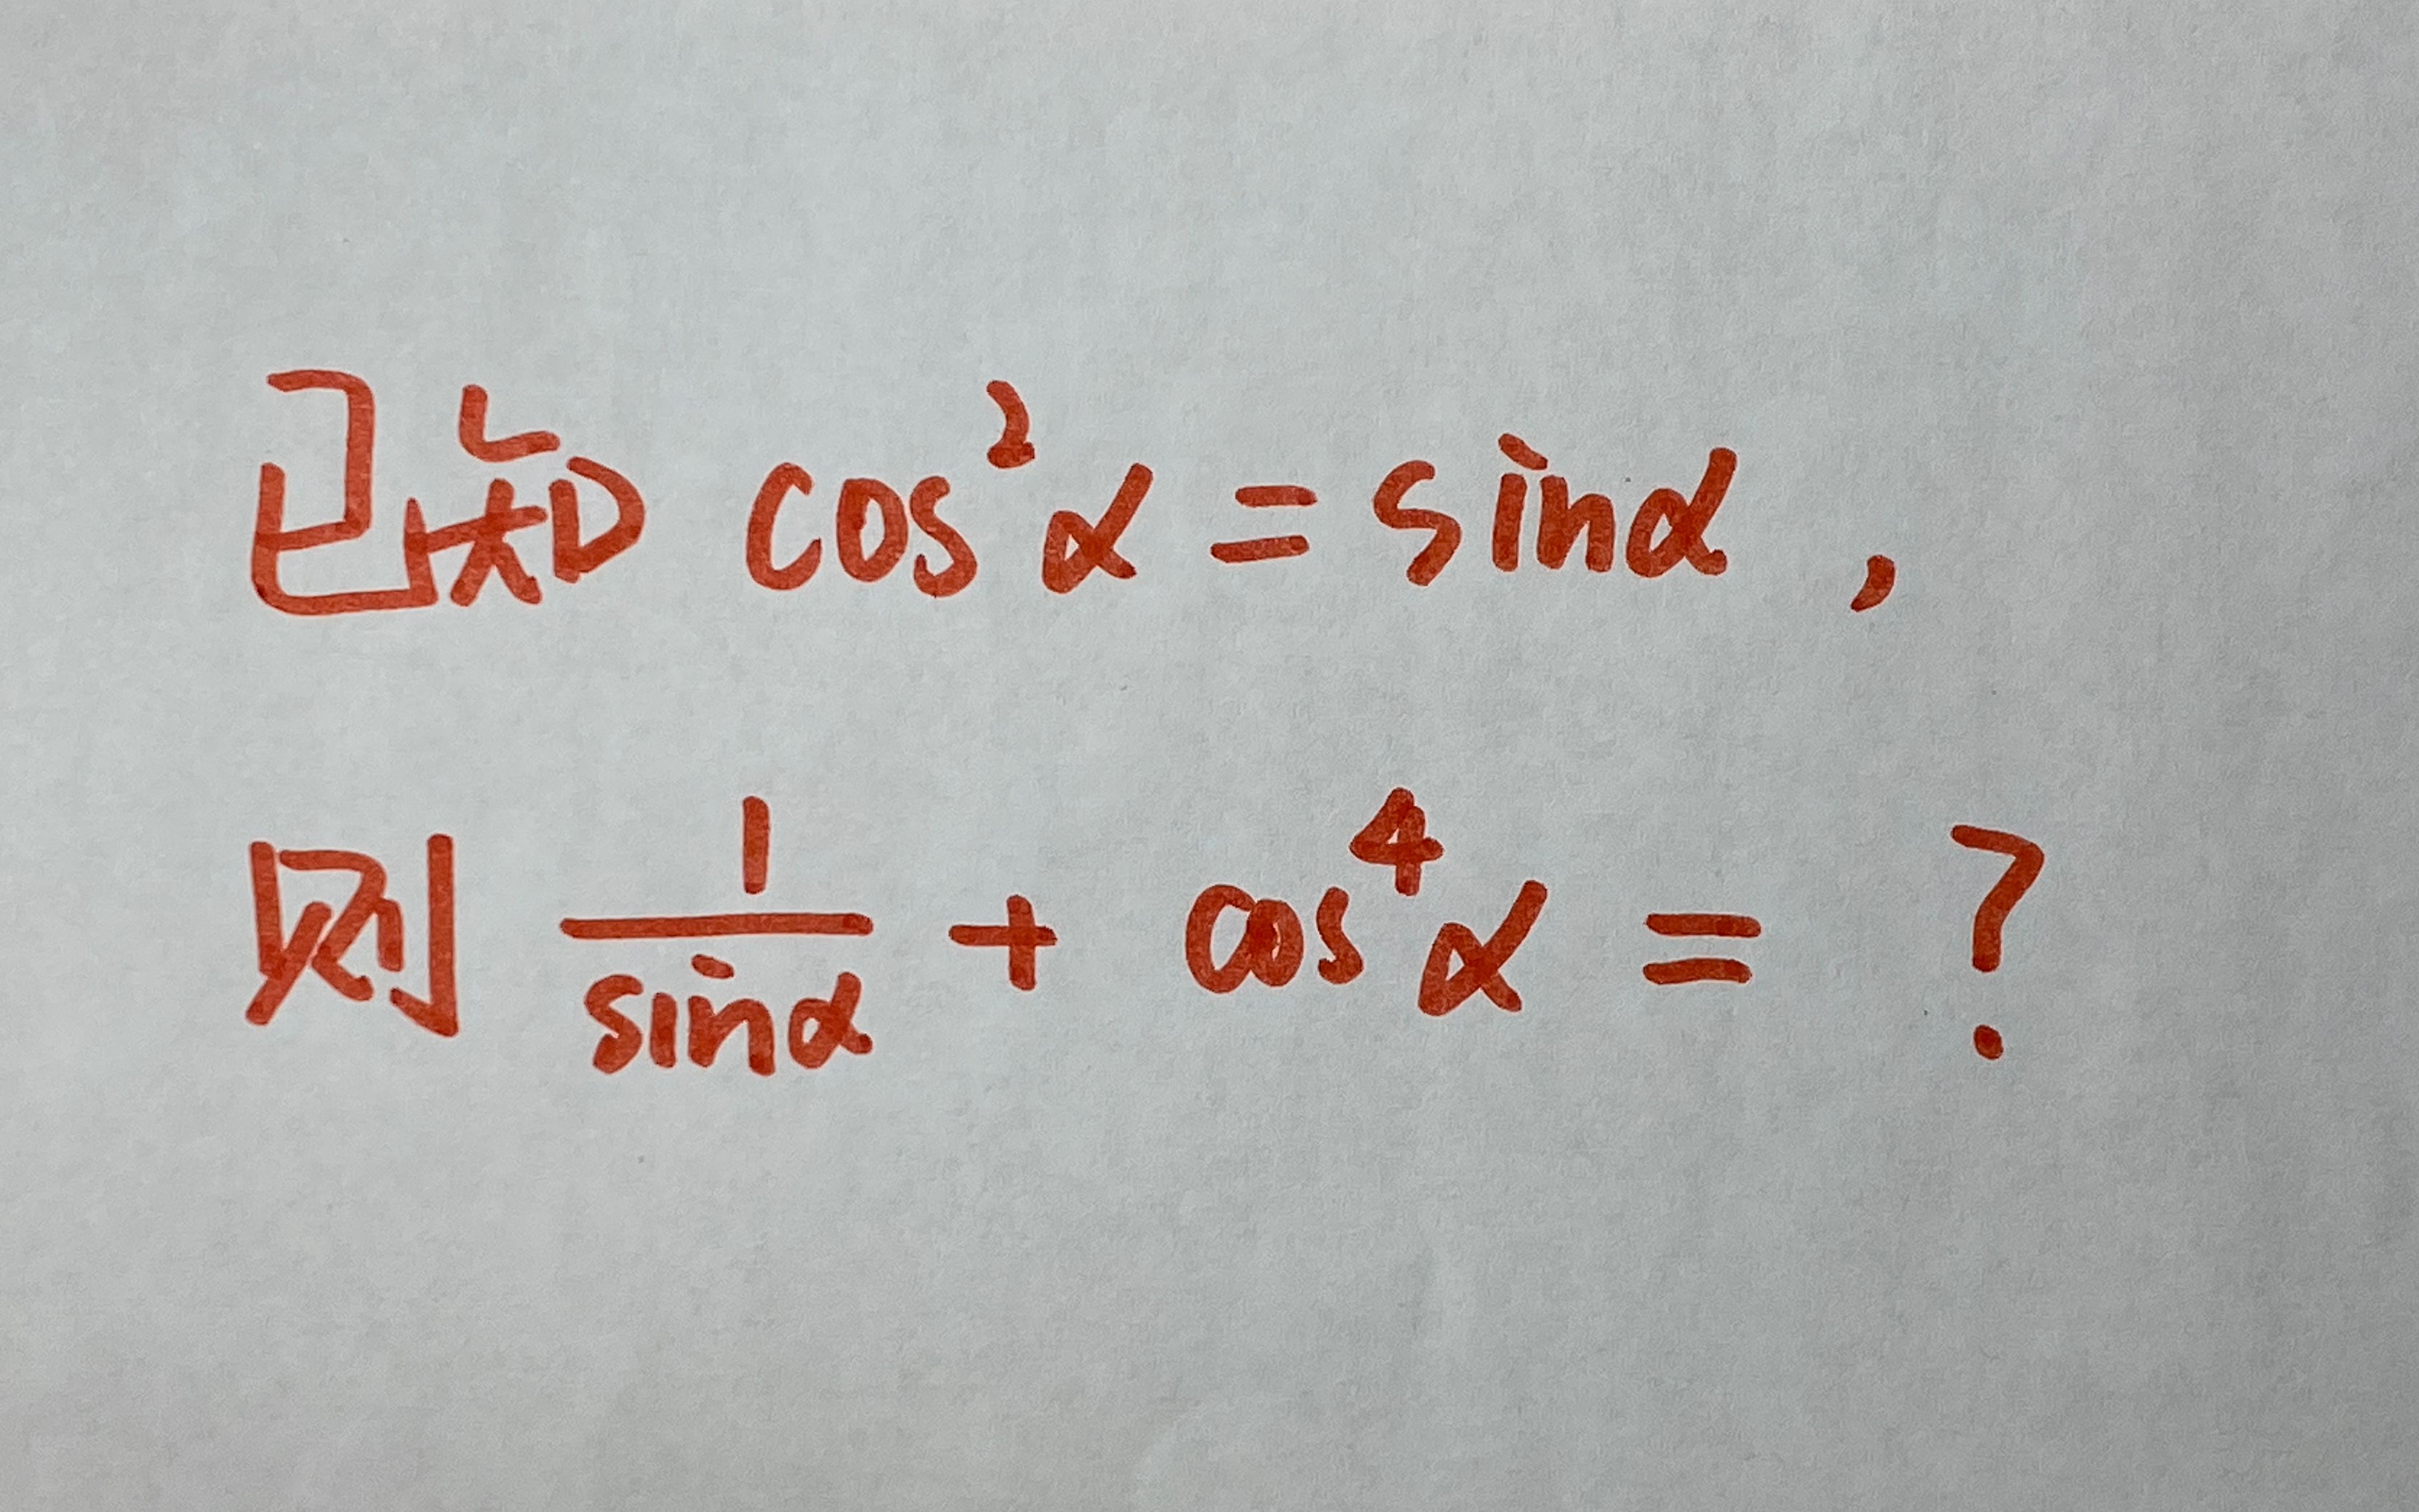 cosα的平方等于sinα基础题考察尖子生对公式的灵活运用